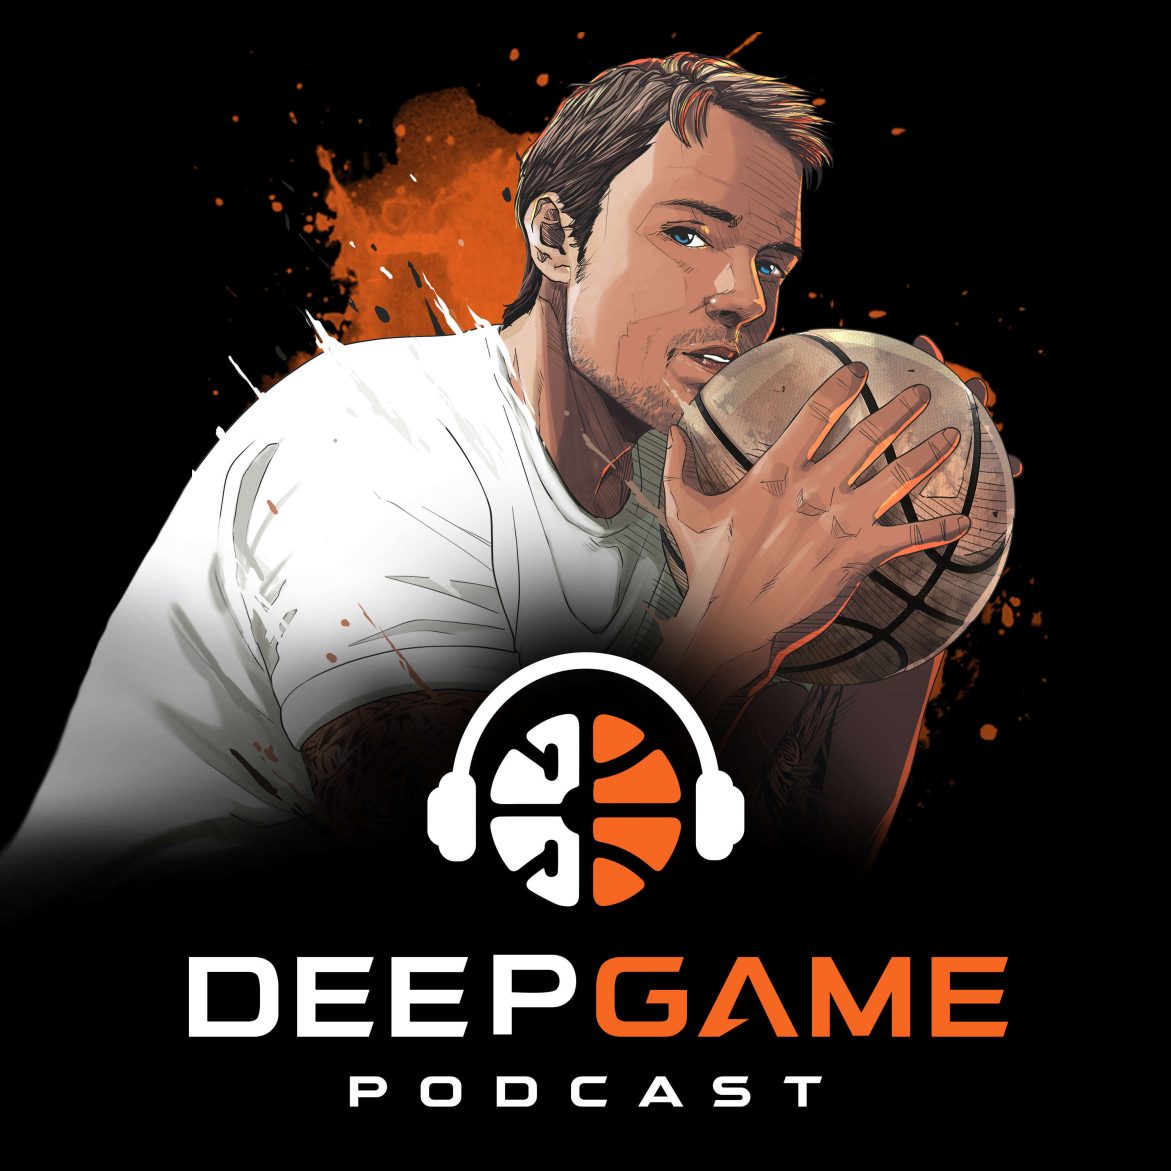 Black Podcasting - Advanced Emotional Intelligence For Basketball & Life (Beyond Basketball)